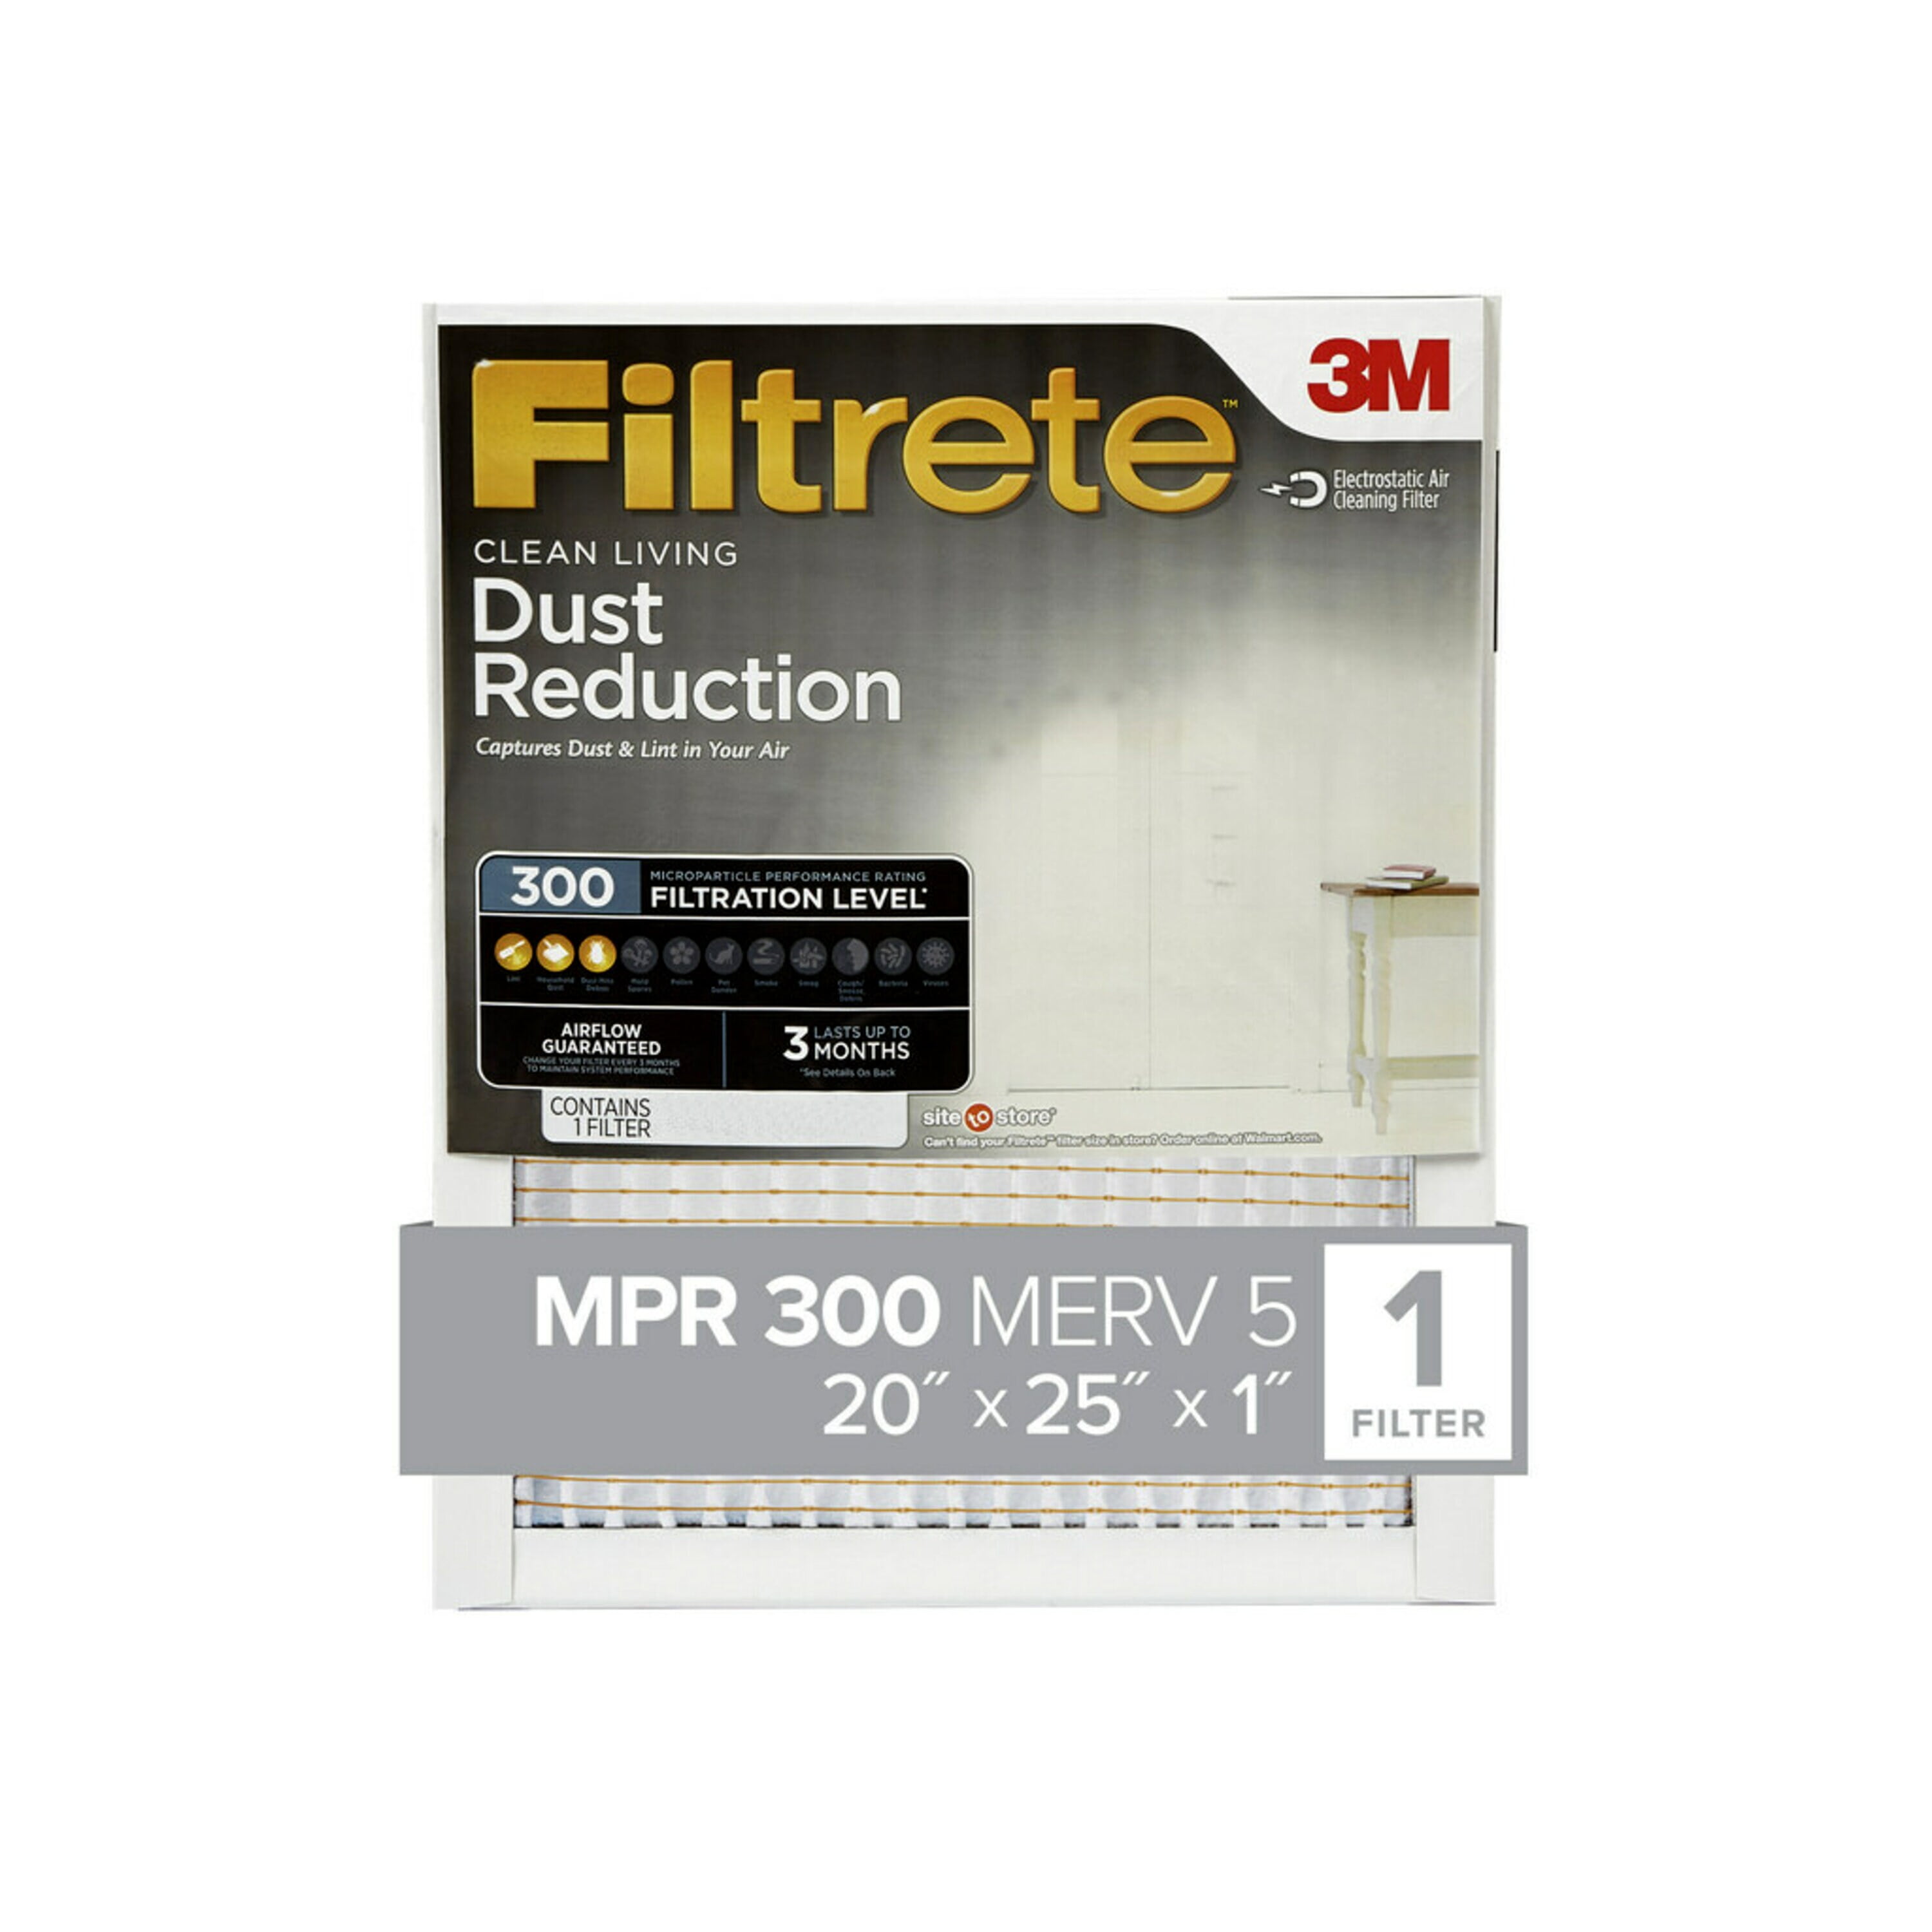 Filtrete 20x25x1, MERV 5, Dust Reduction HVAC Furnace Air Filter, 300 MPR, 1 Filter